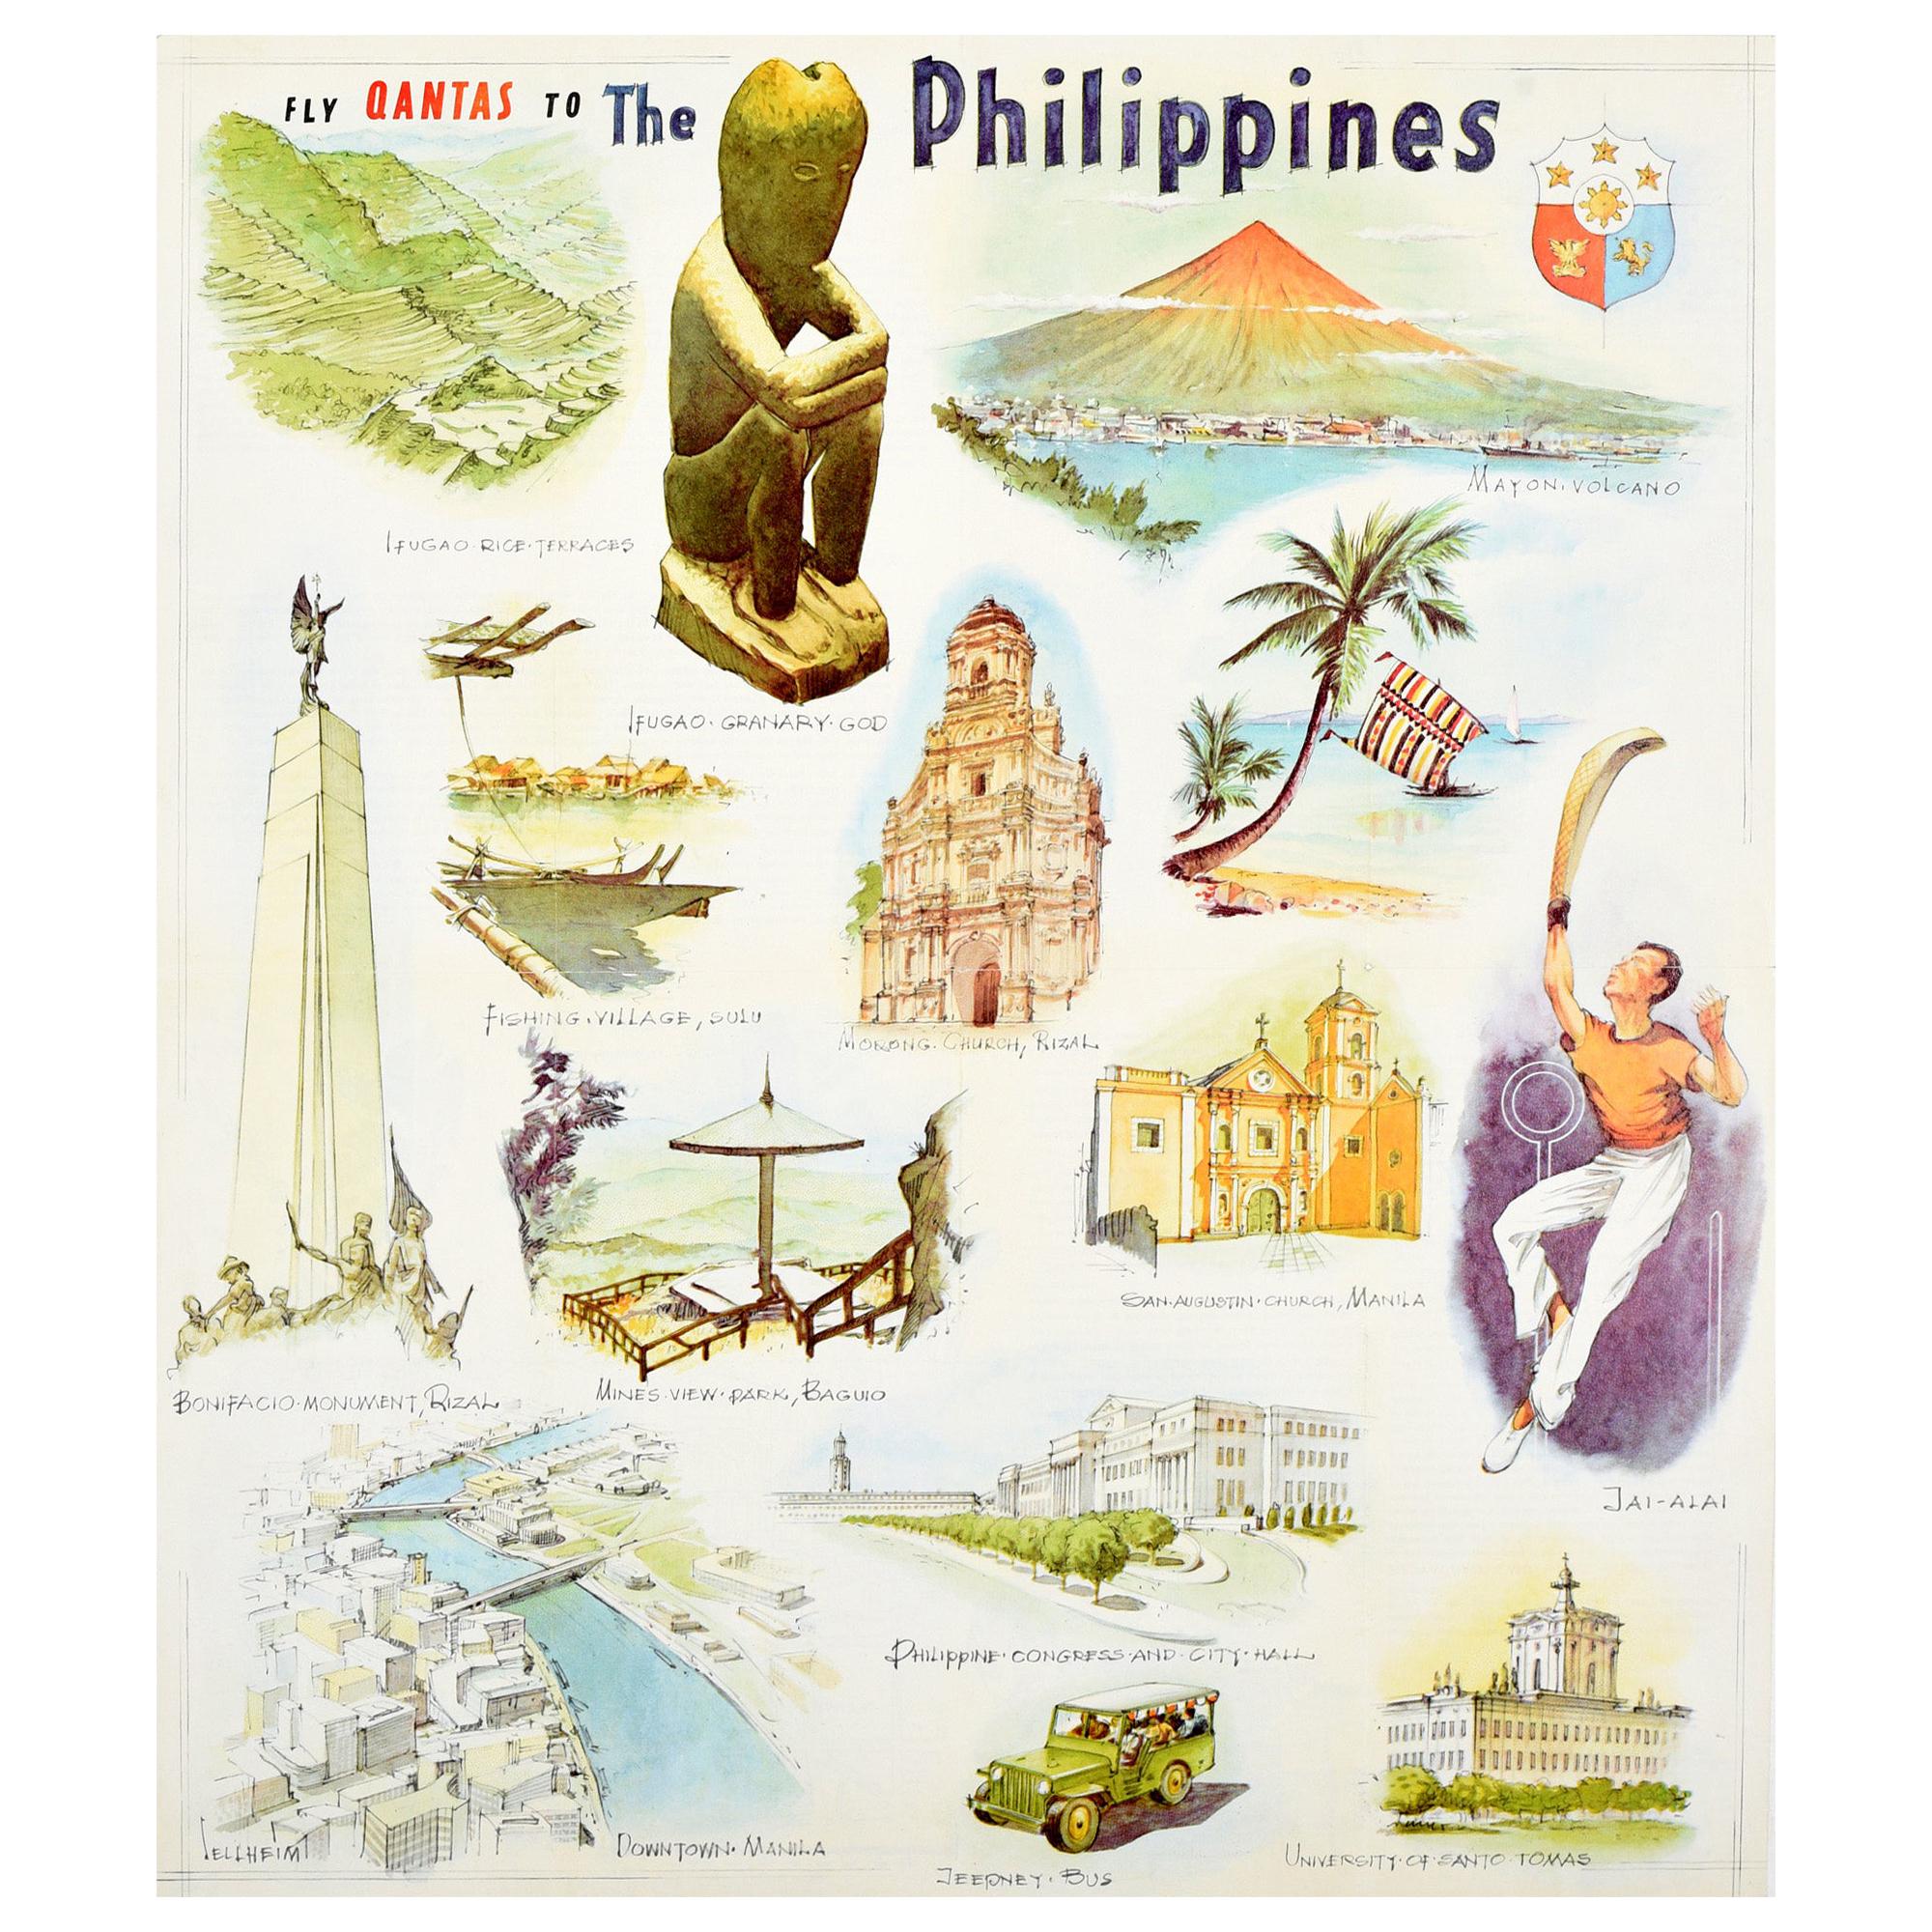 Original Vintage Poster "Fly Qantas To The Philippines", Reisekuns,t Illustrationen